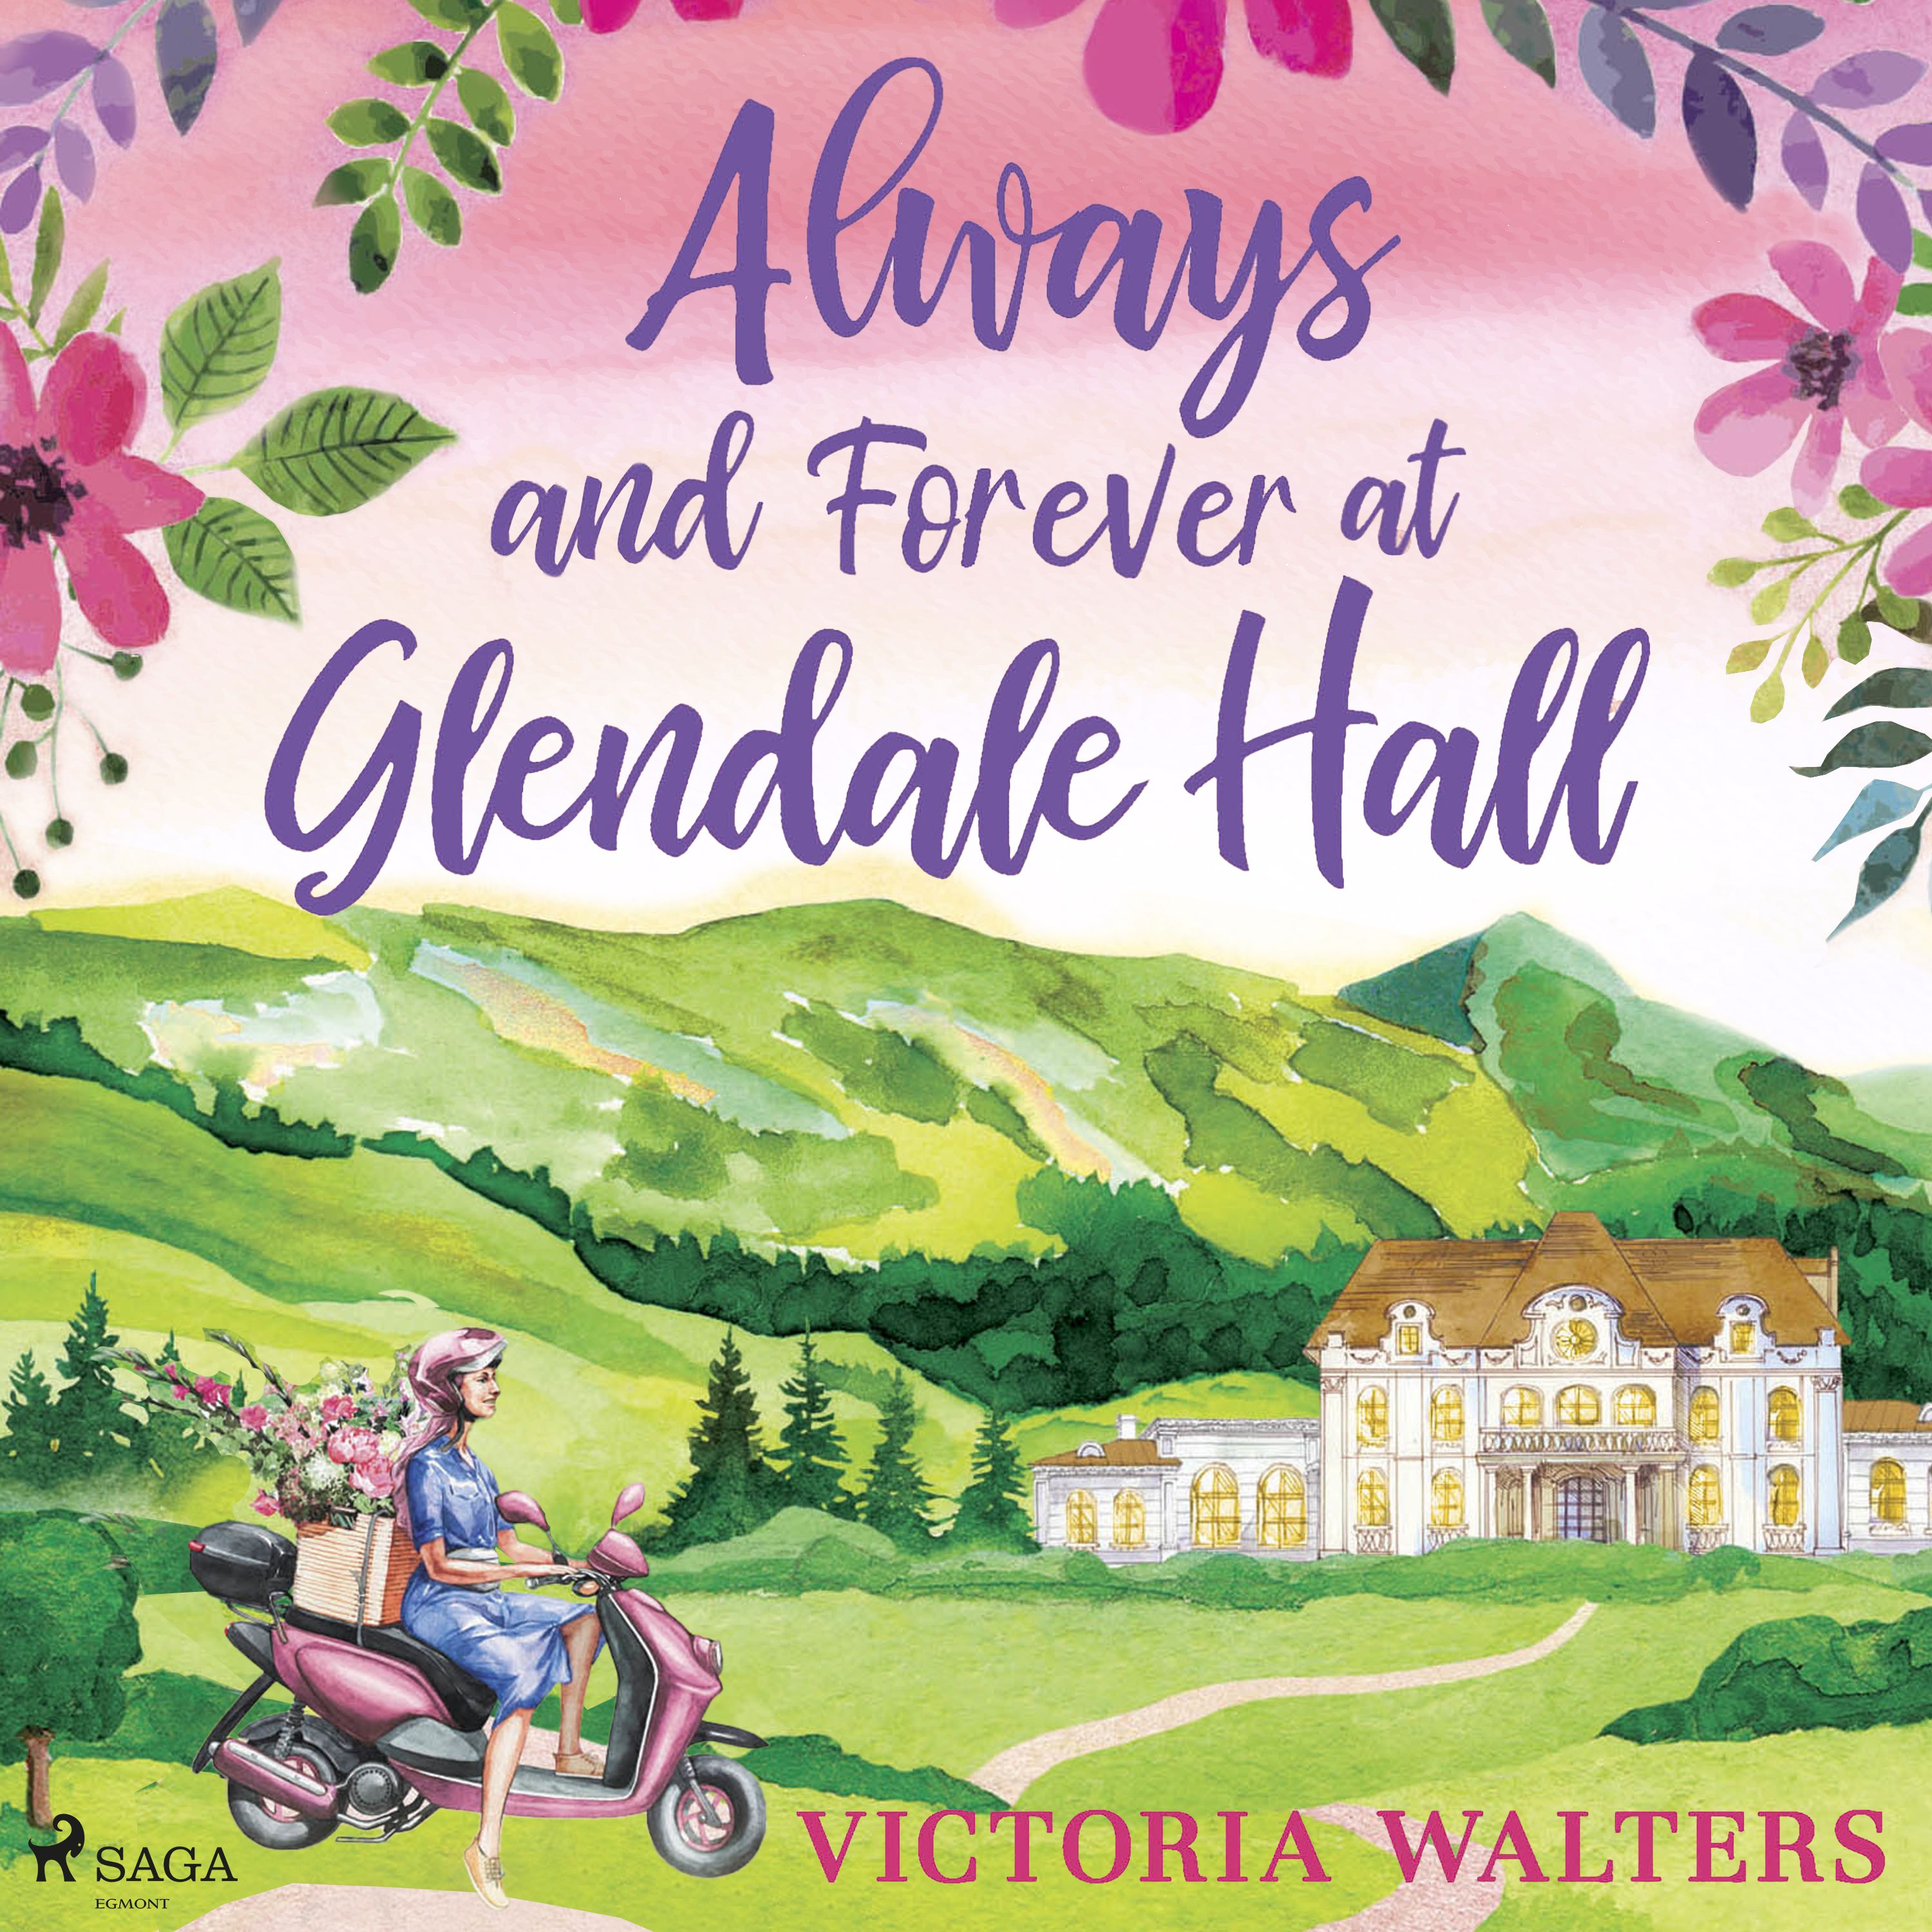 Always and Forever at Glendale Hall, ljudbok av Victoria Walters